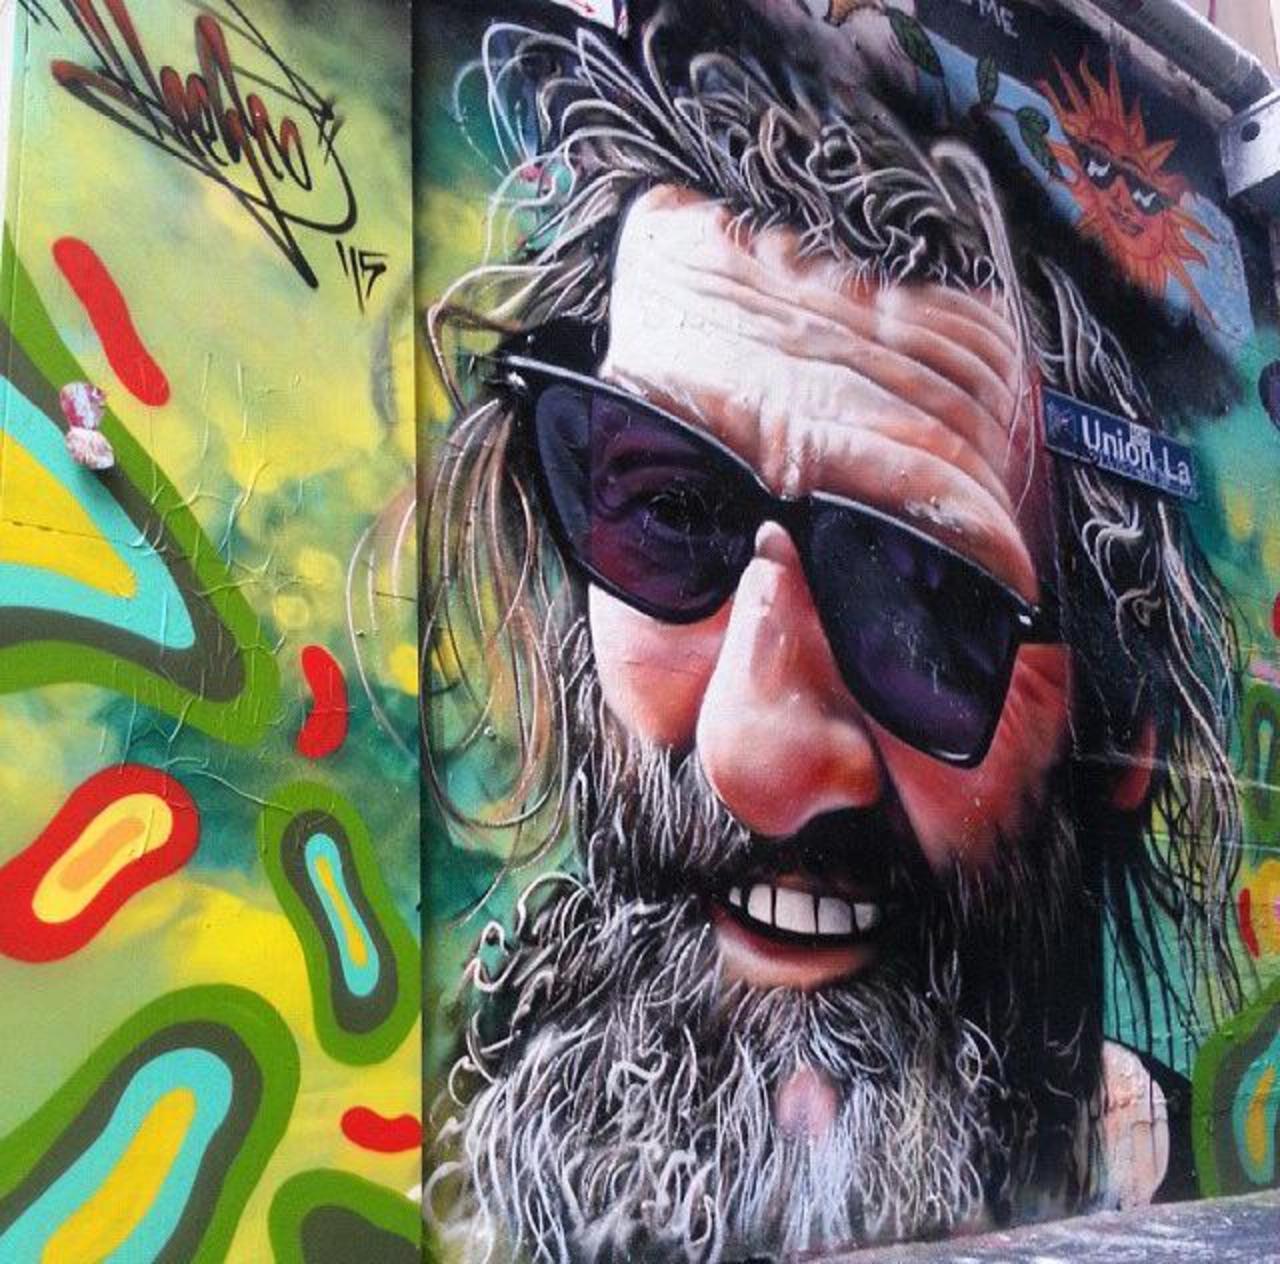 Street Art by Heesco in Melbourne 

#art #arte #graffiti #streetart http://t.co/RlgqzQt7b6